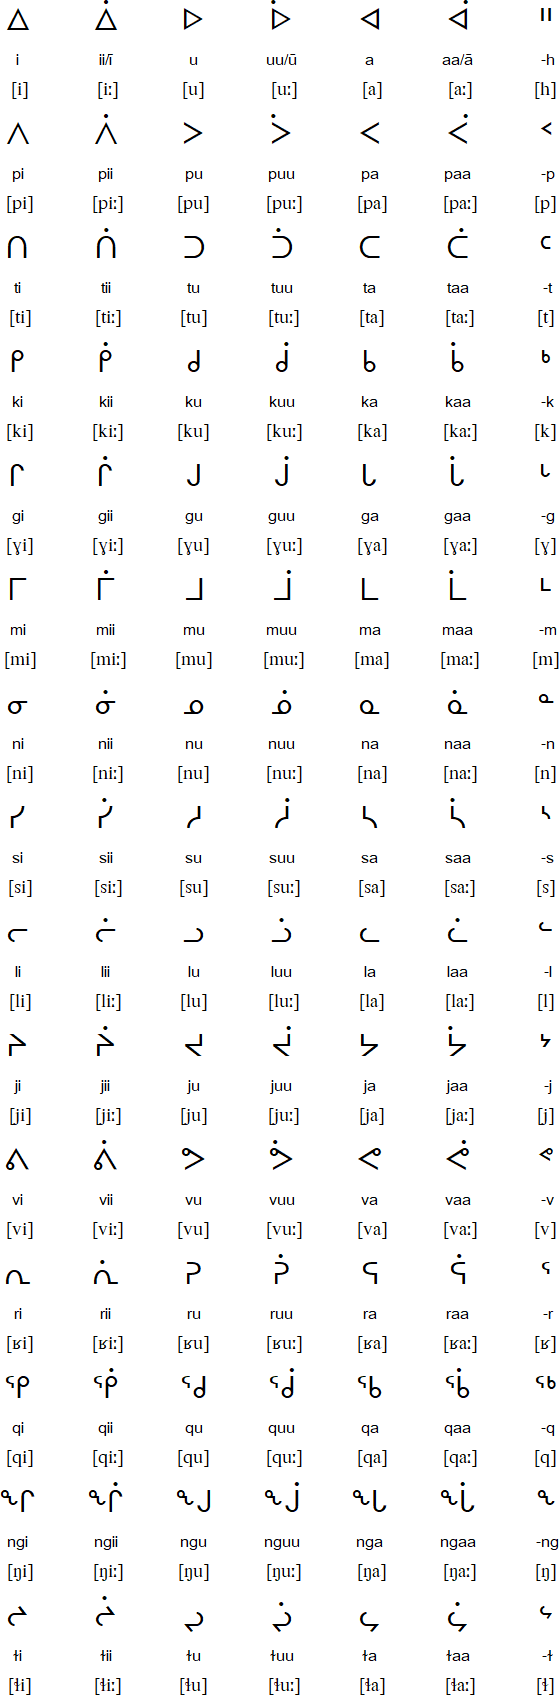 Inuktitut syllabary